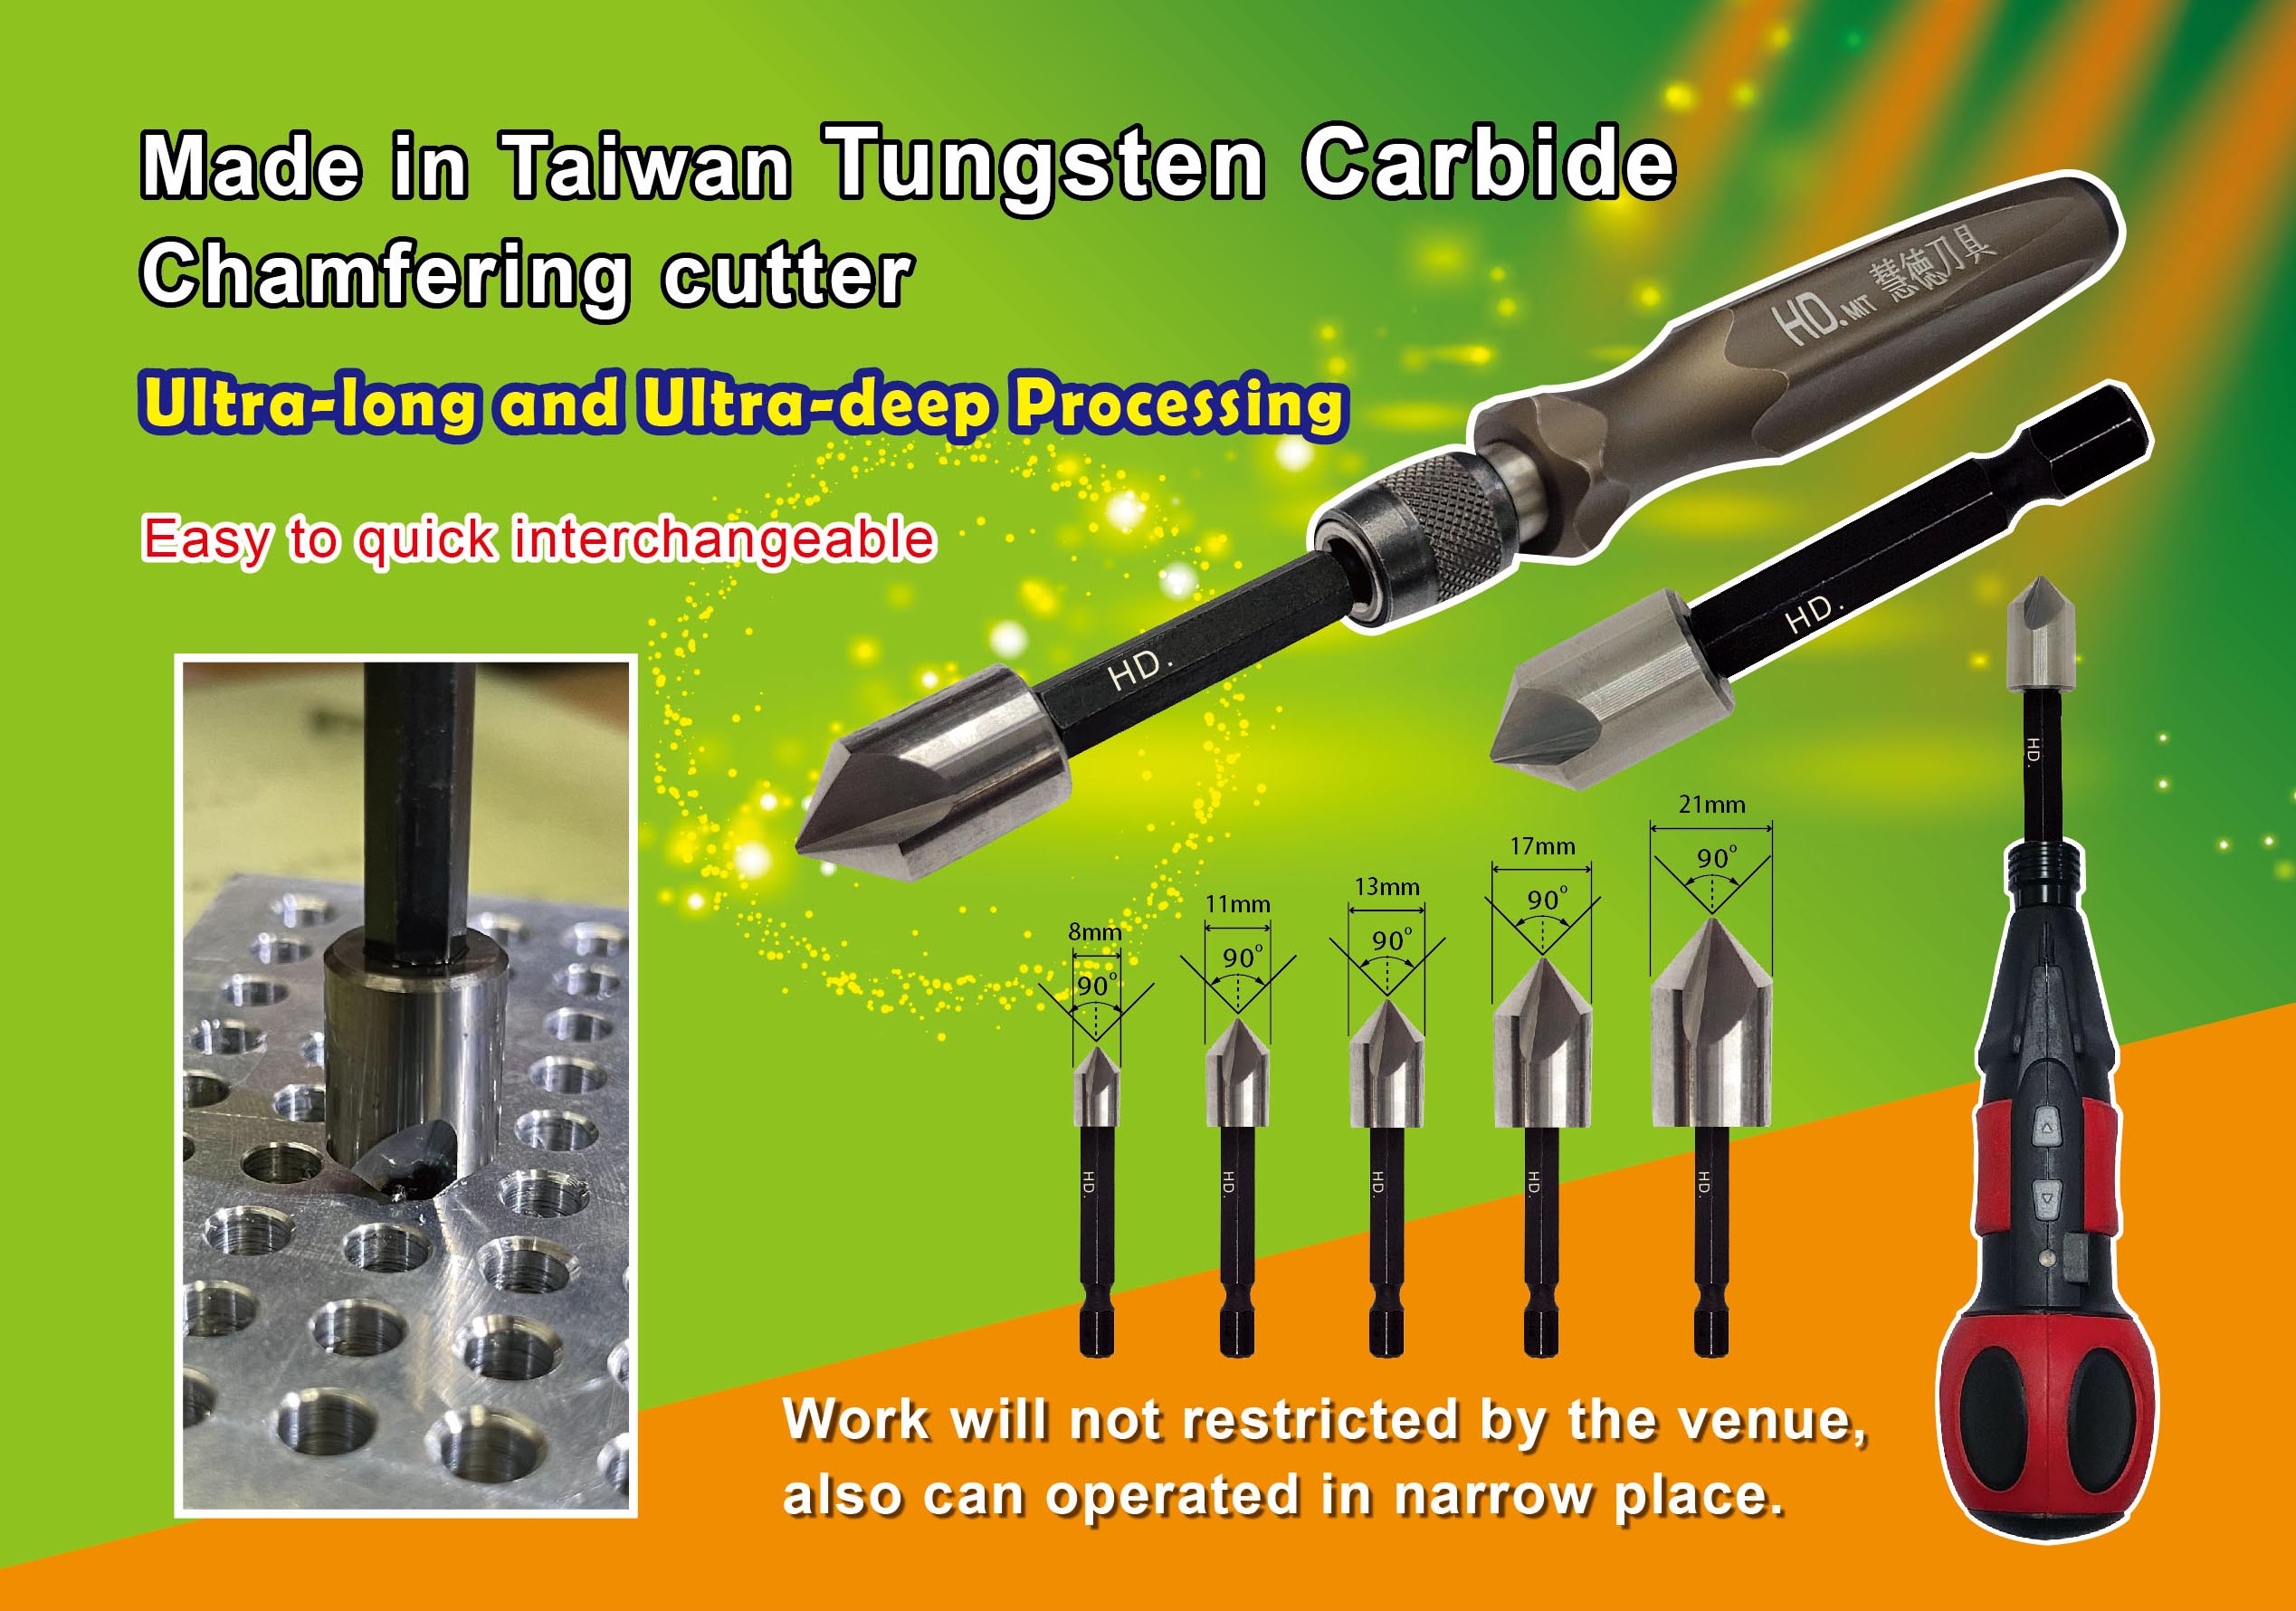 Made in Taiwan Tungsten Carbide Chamfering Cutter